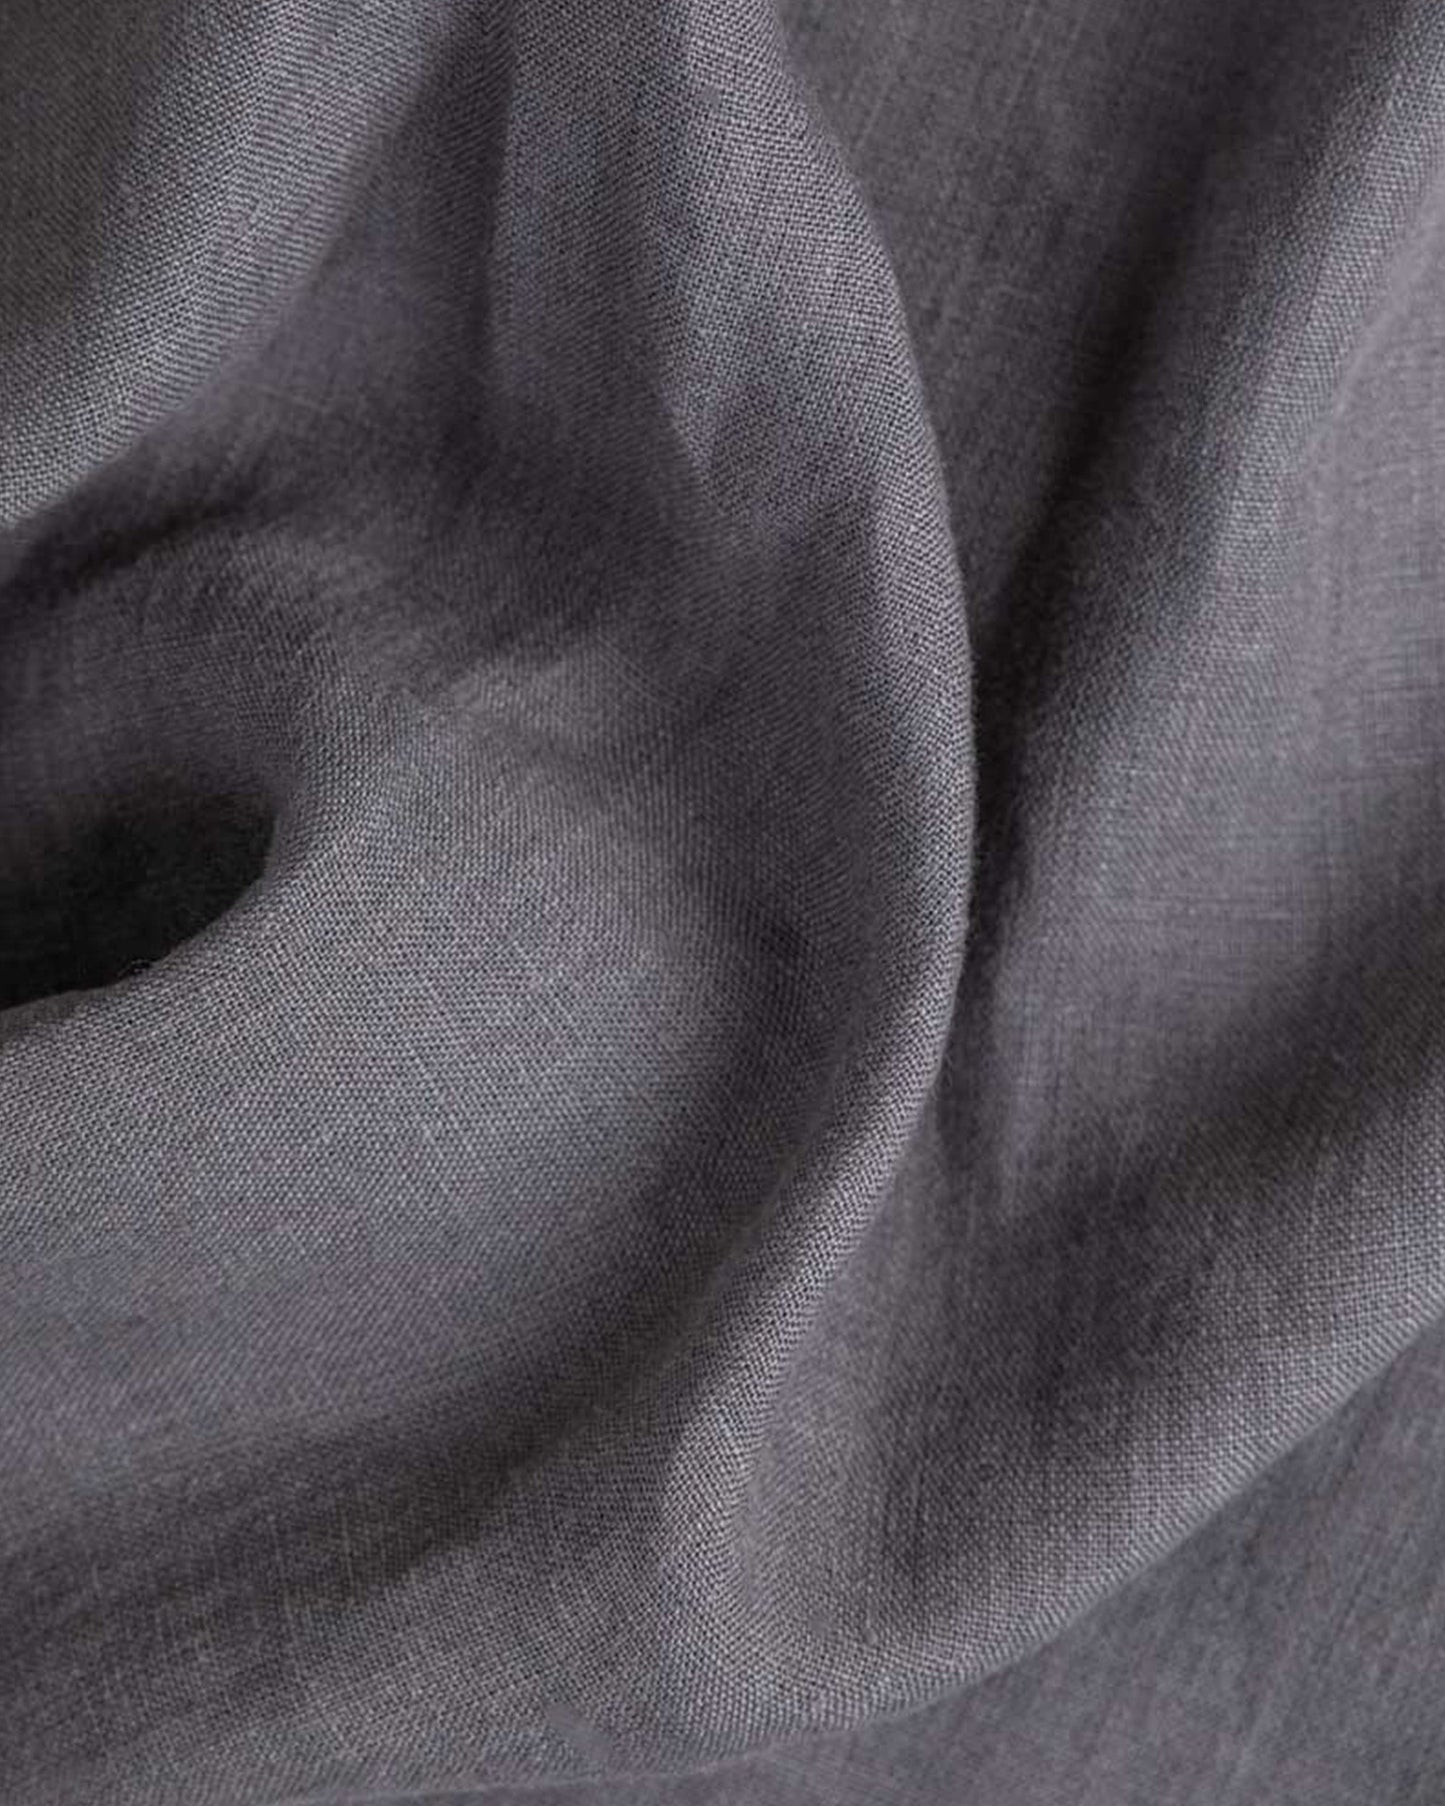 Custom size Charcoal gray linen fitted sheet - MagicLinen